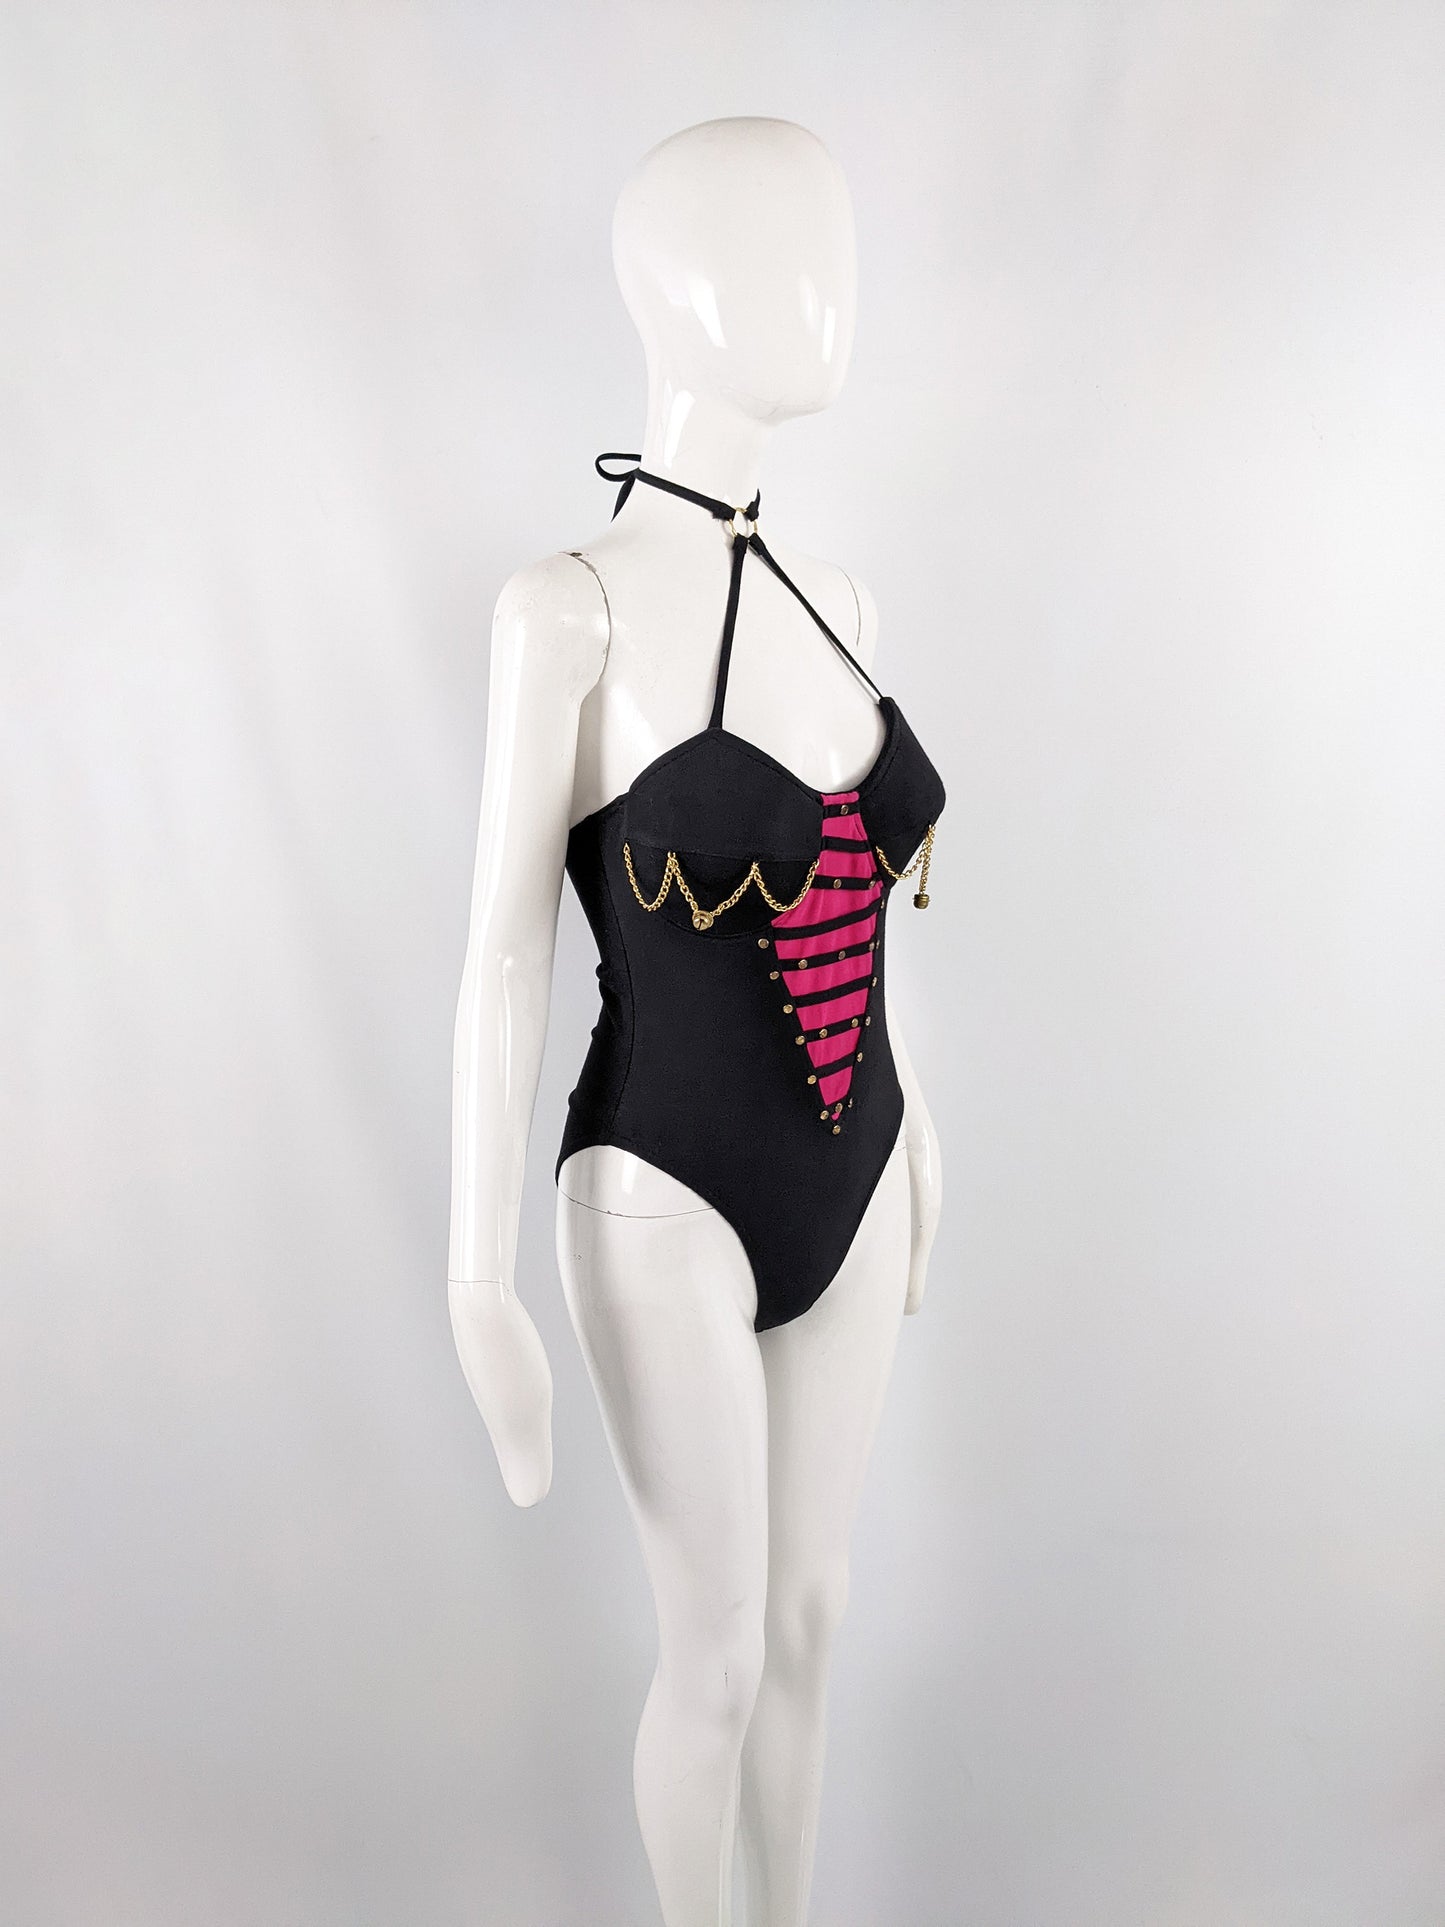 Tropical Climax Vintage Black & Pink Womens Chain Bodysuit, 1980s